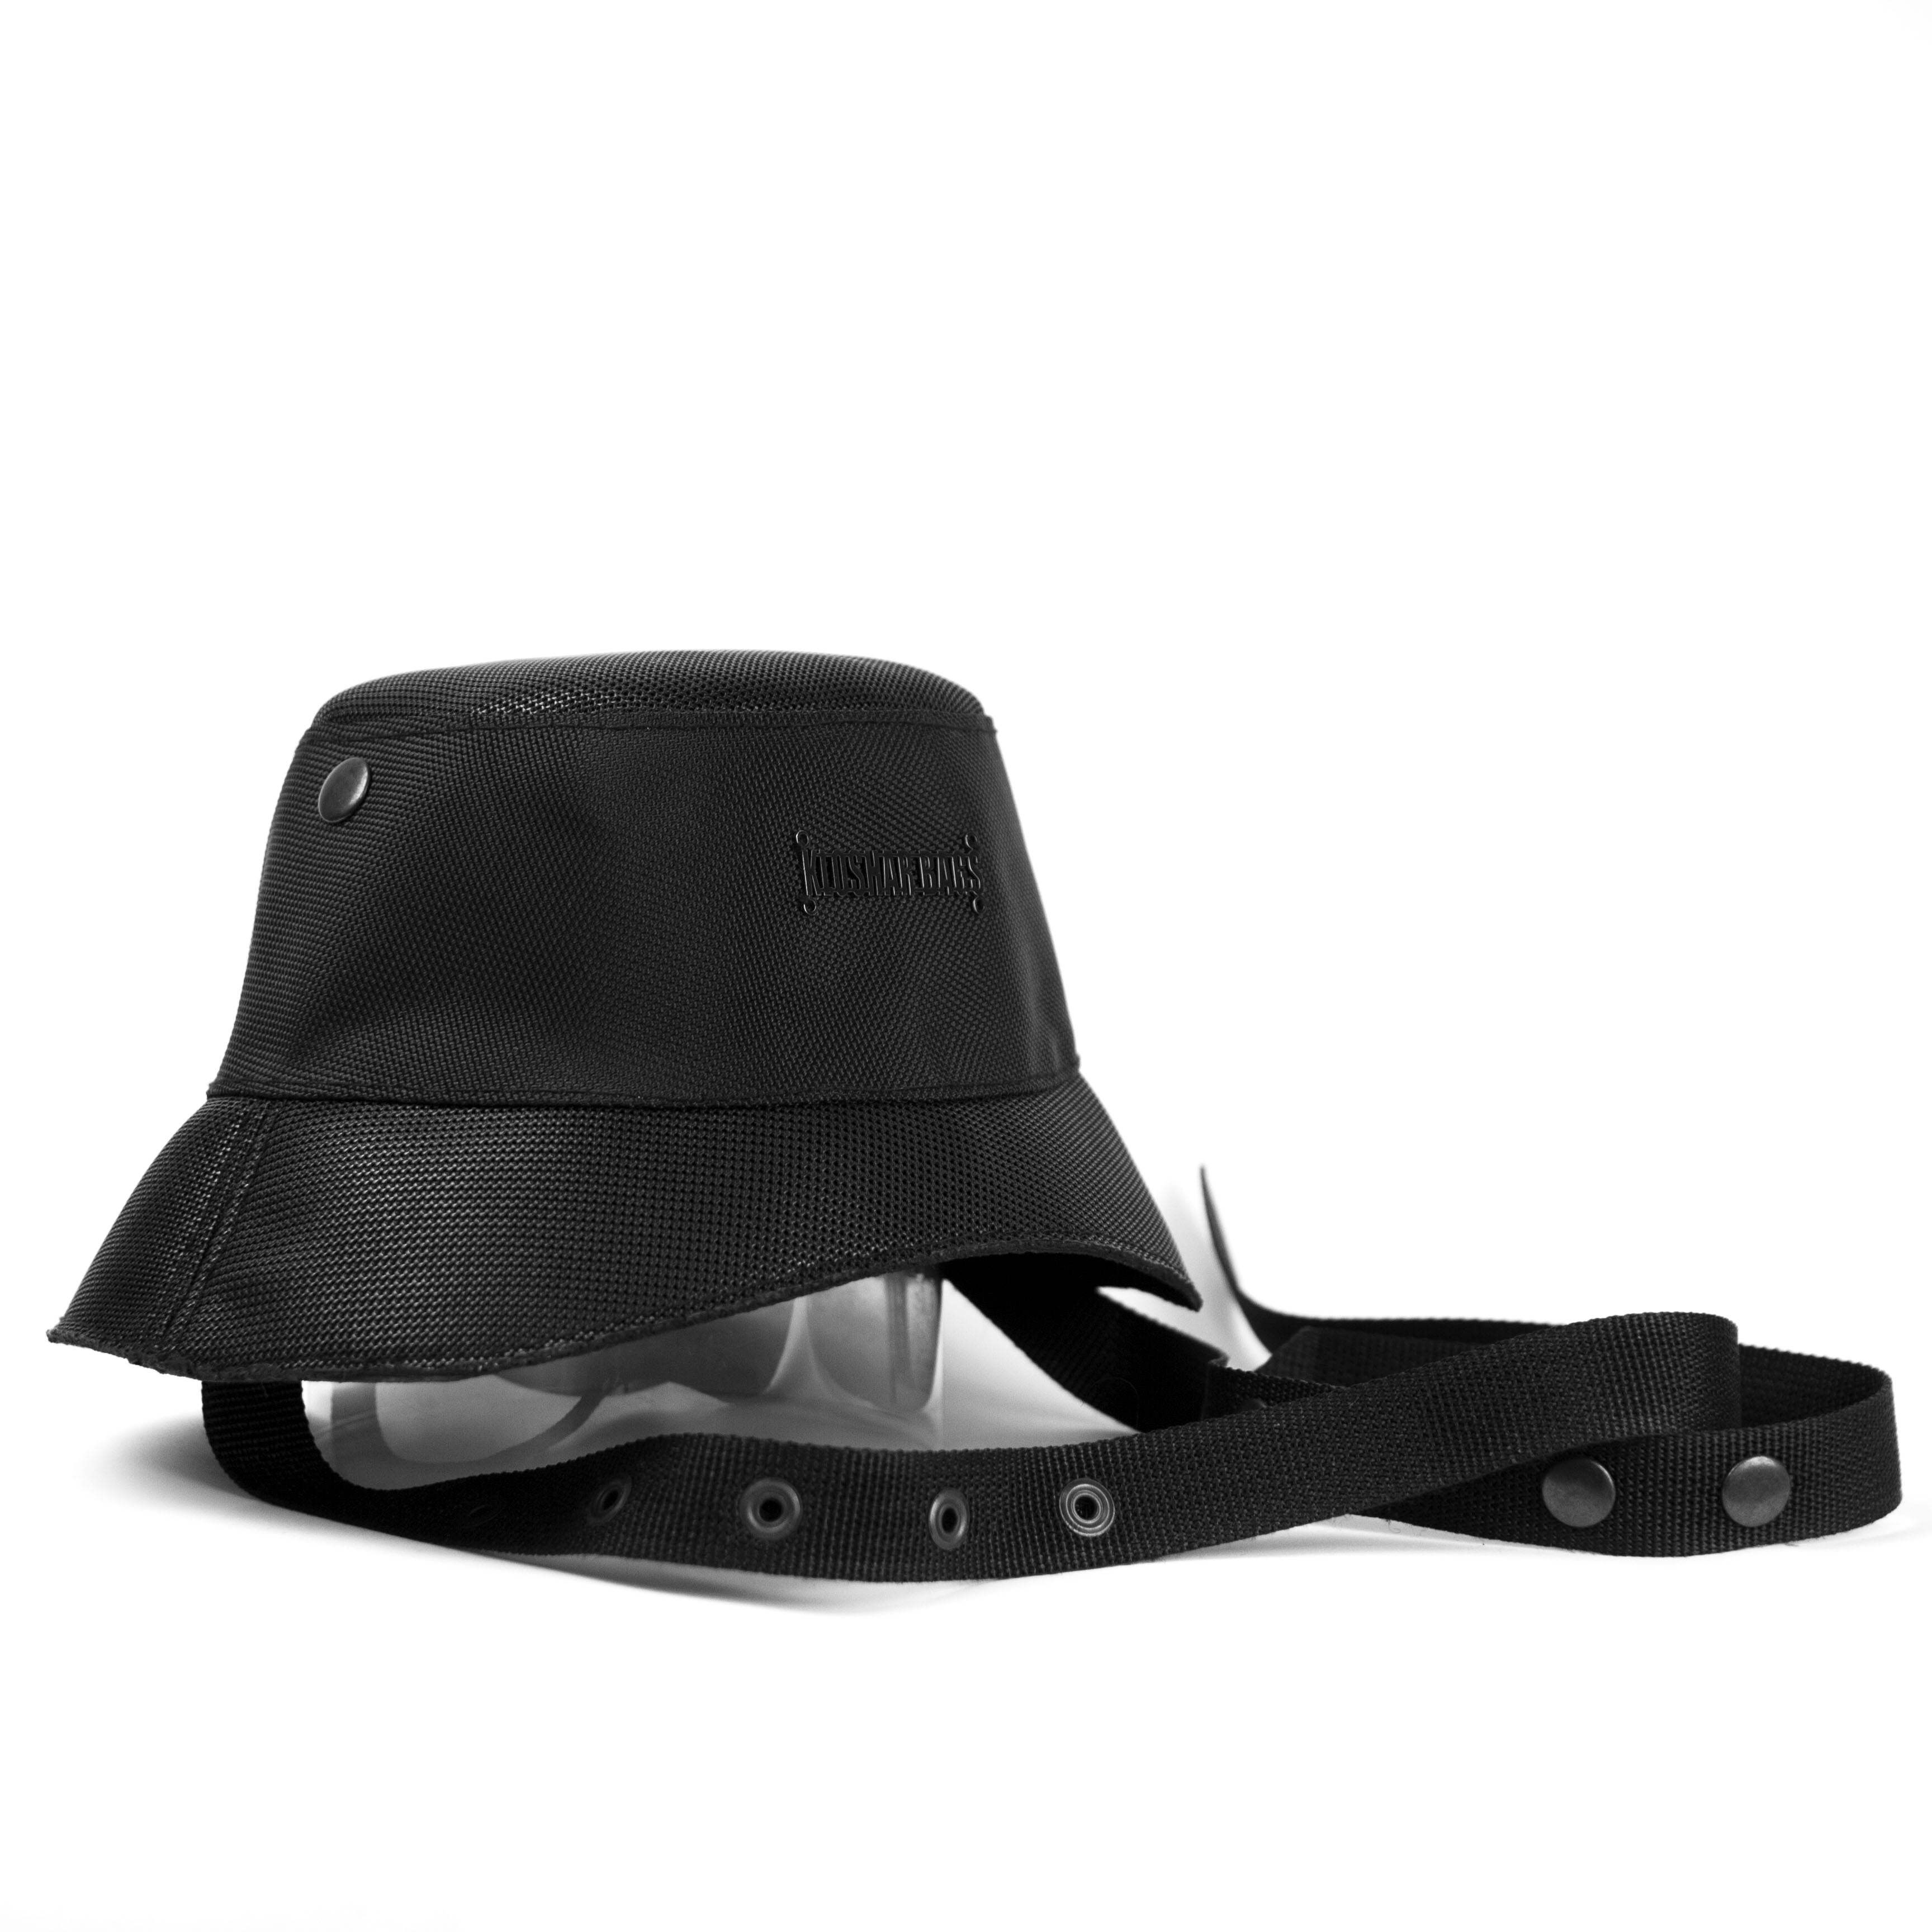 kloshar(クローサー)MICKY HATS/black - メンズファッション